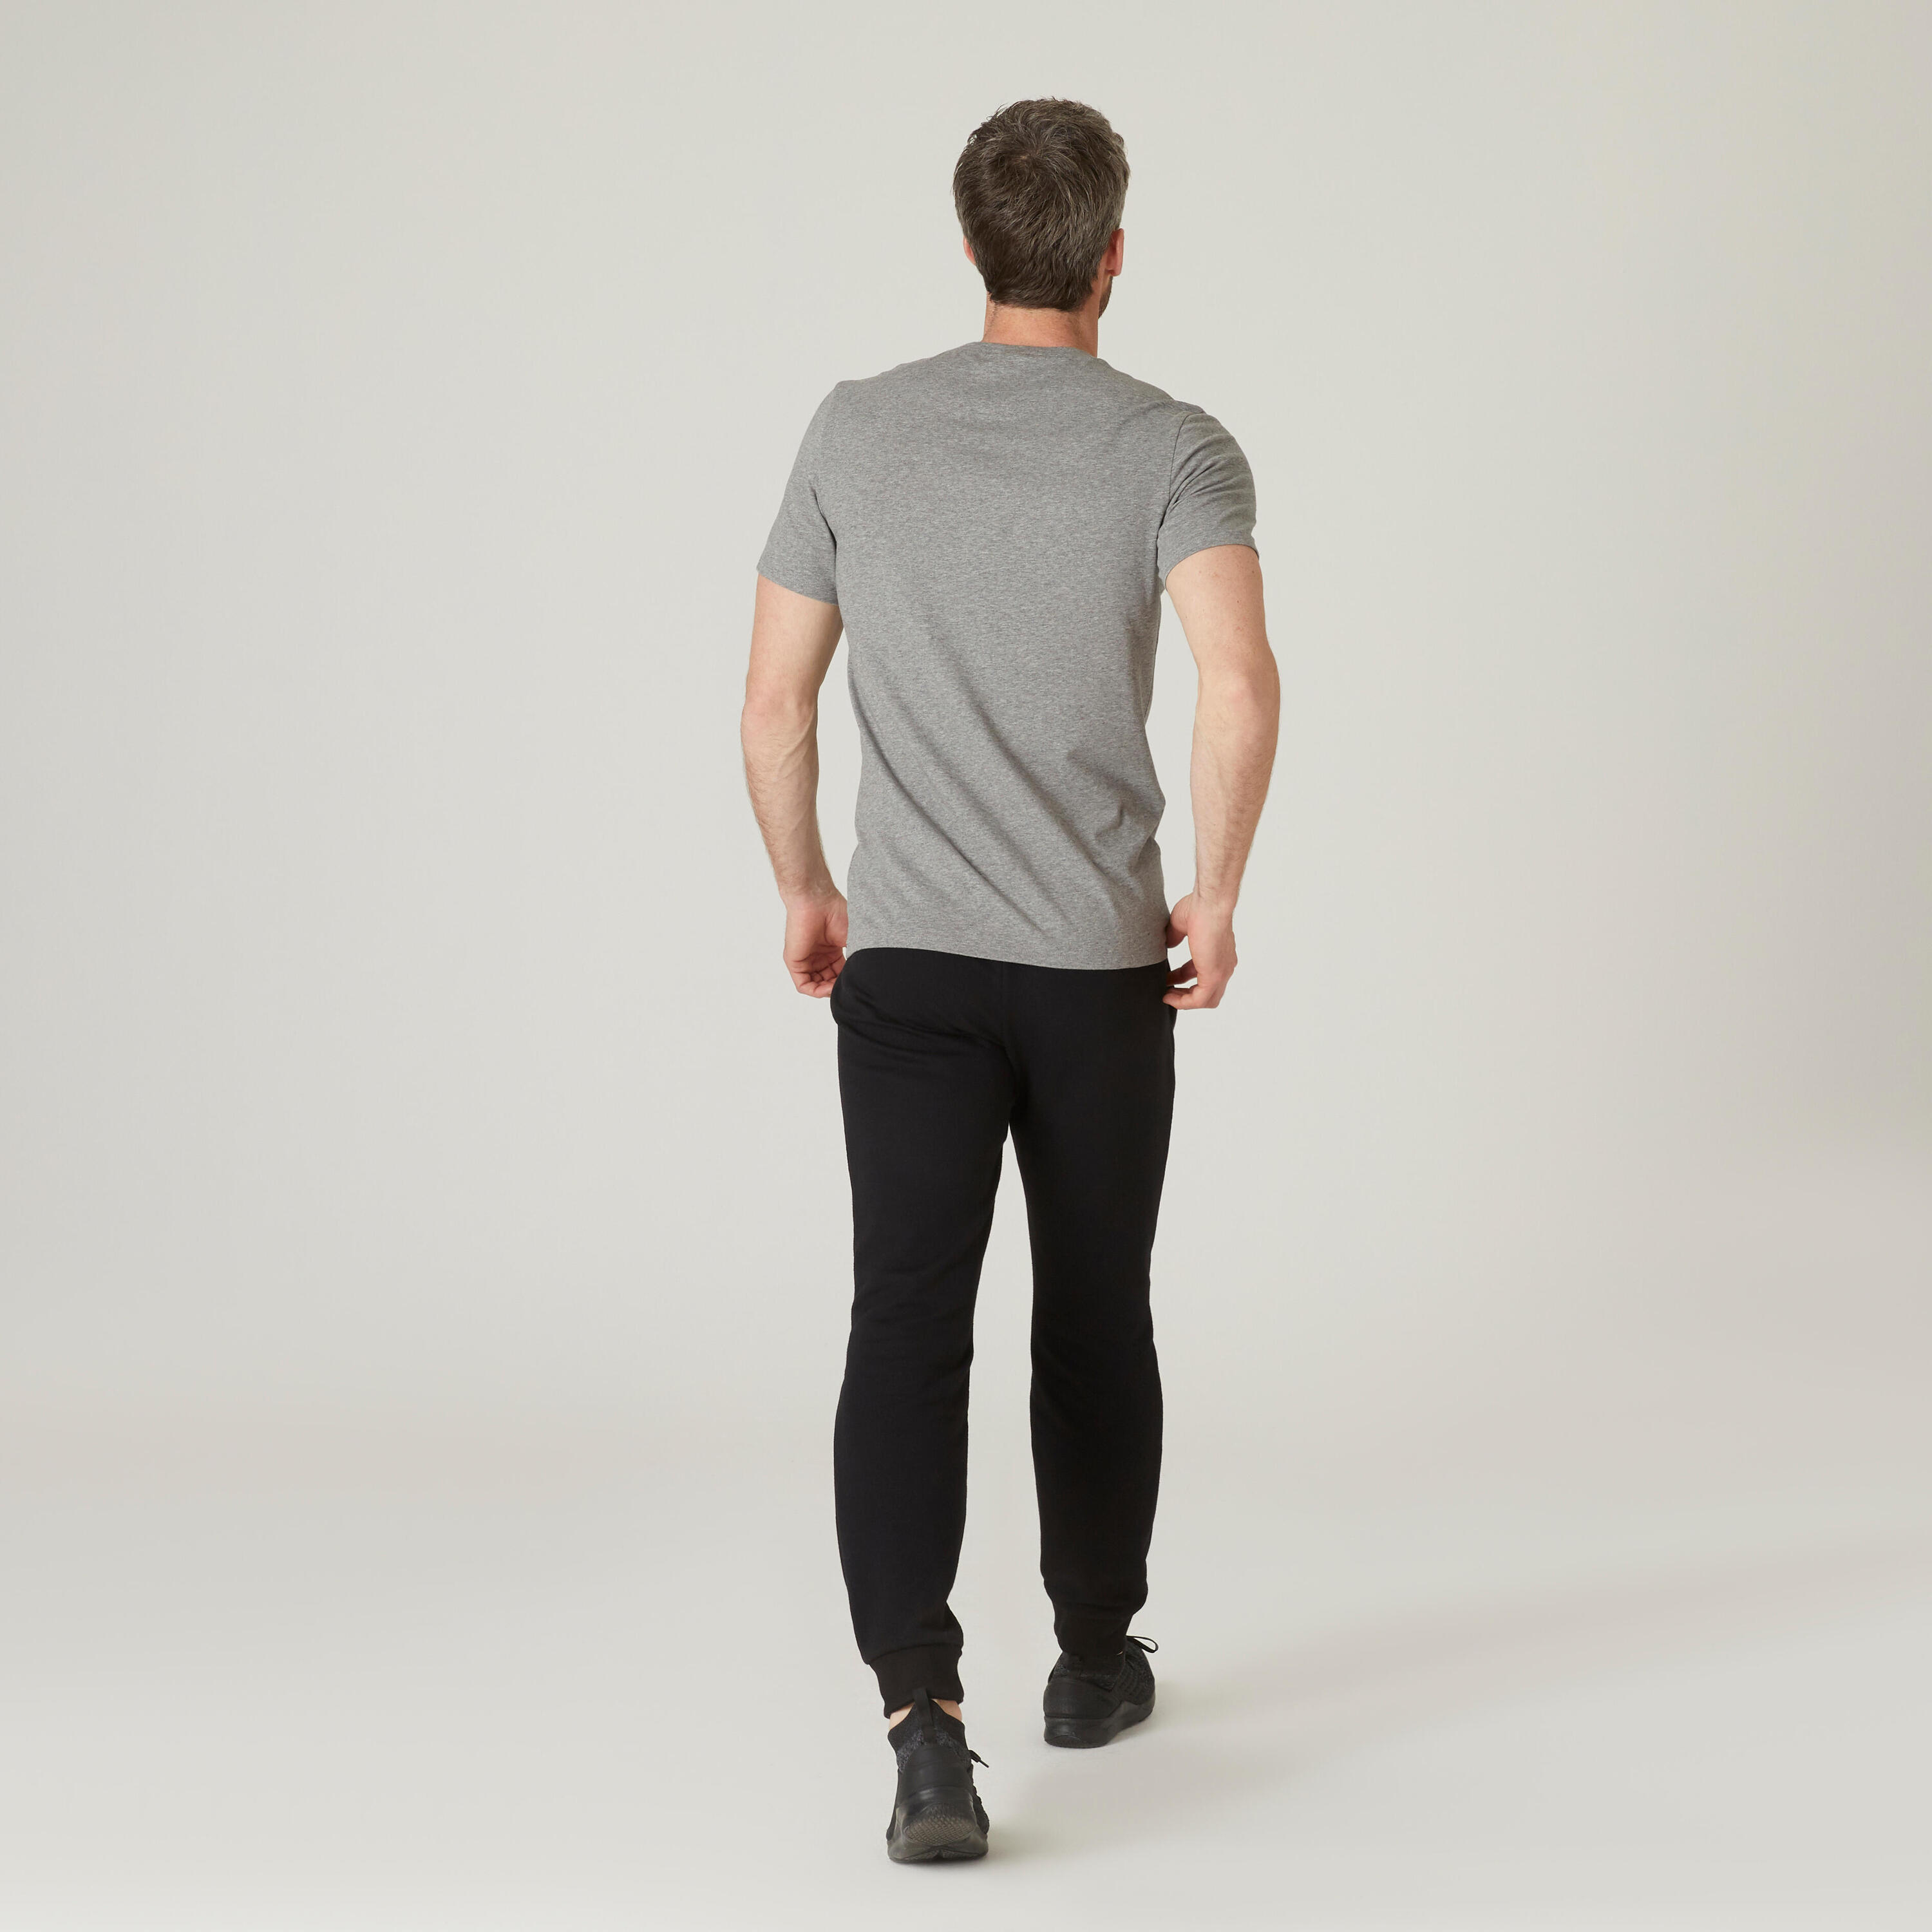 Men's Slim-Fit Fitness T-Shirt 500 - Grey 2/6